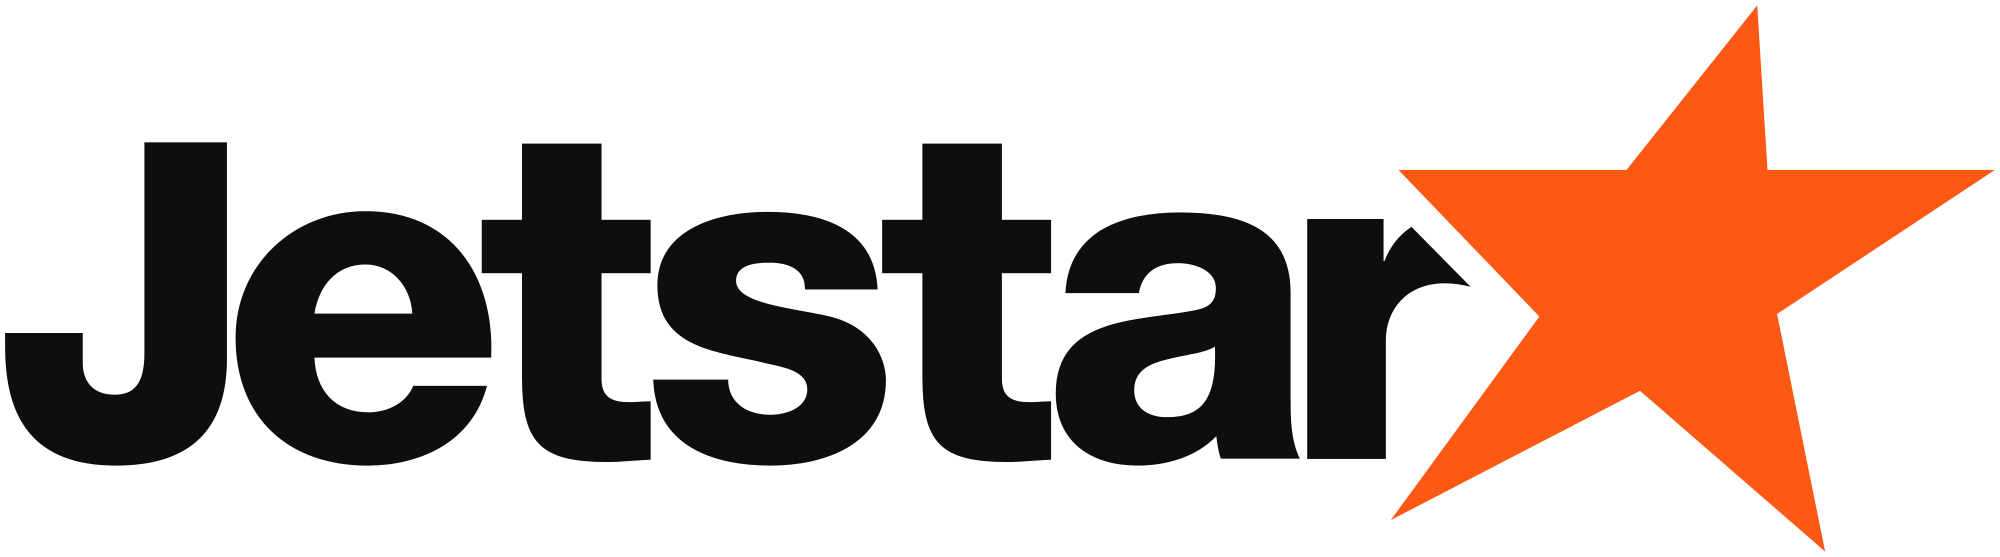 Jetstar Logo - File:Jetstar logo.svg - Wikimedia Commons